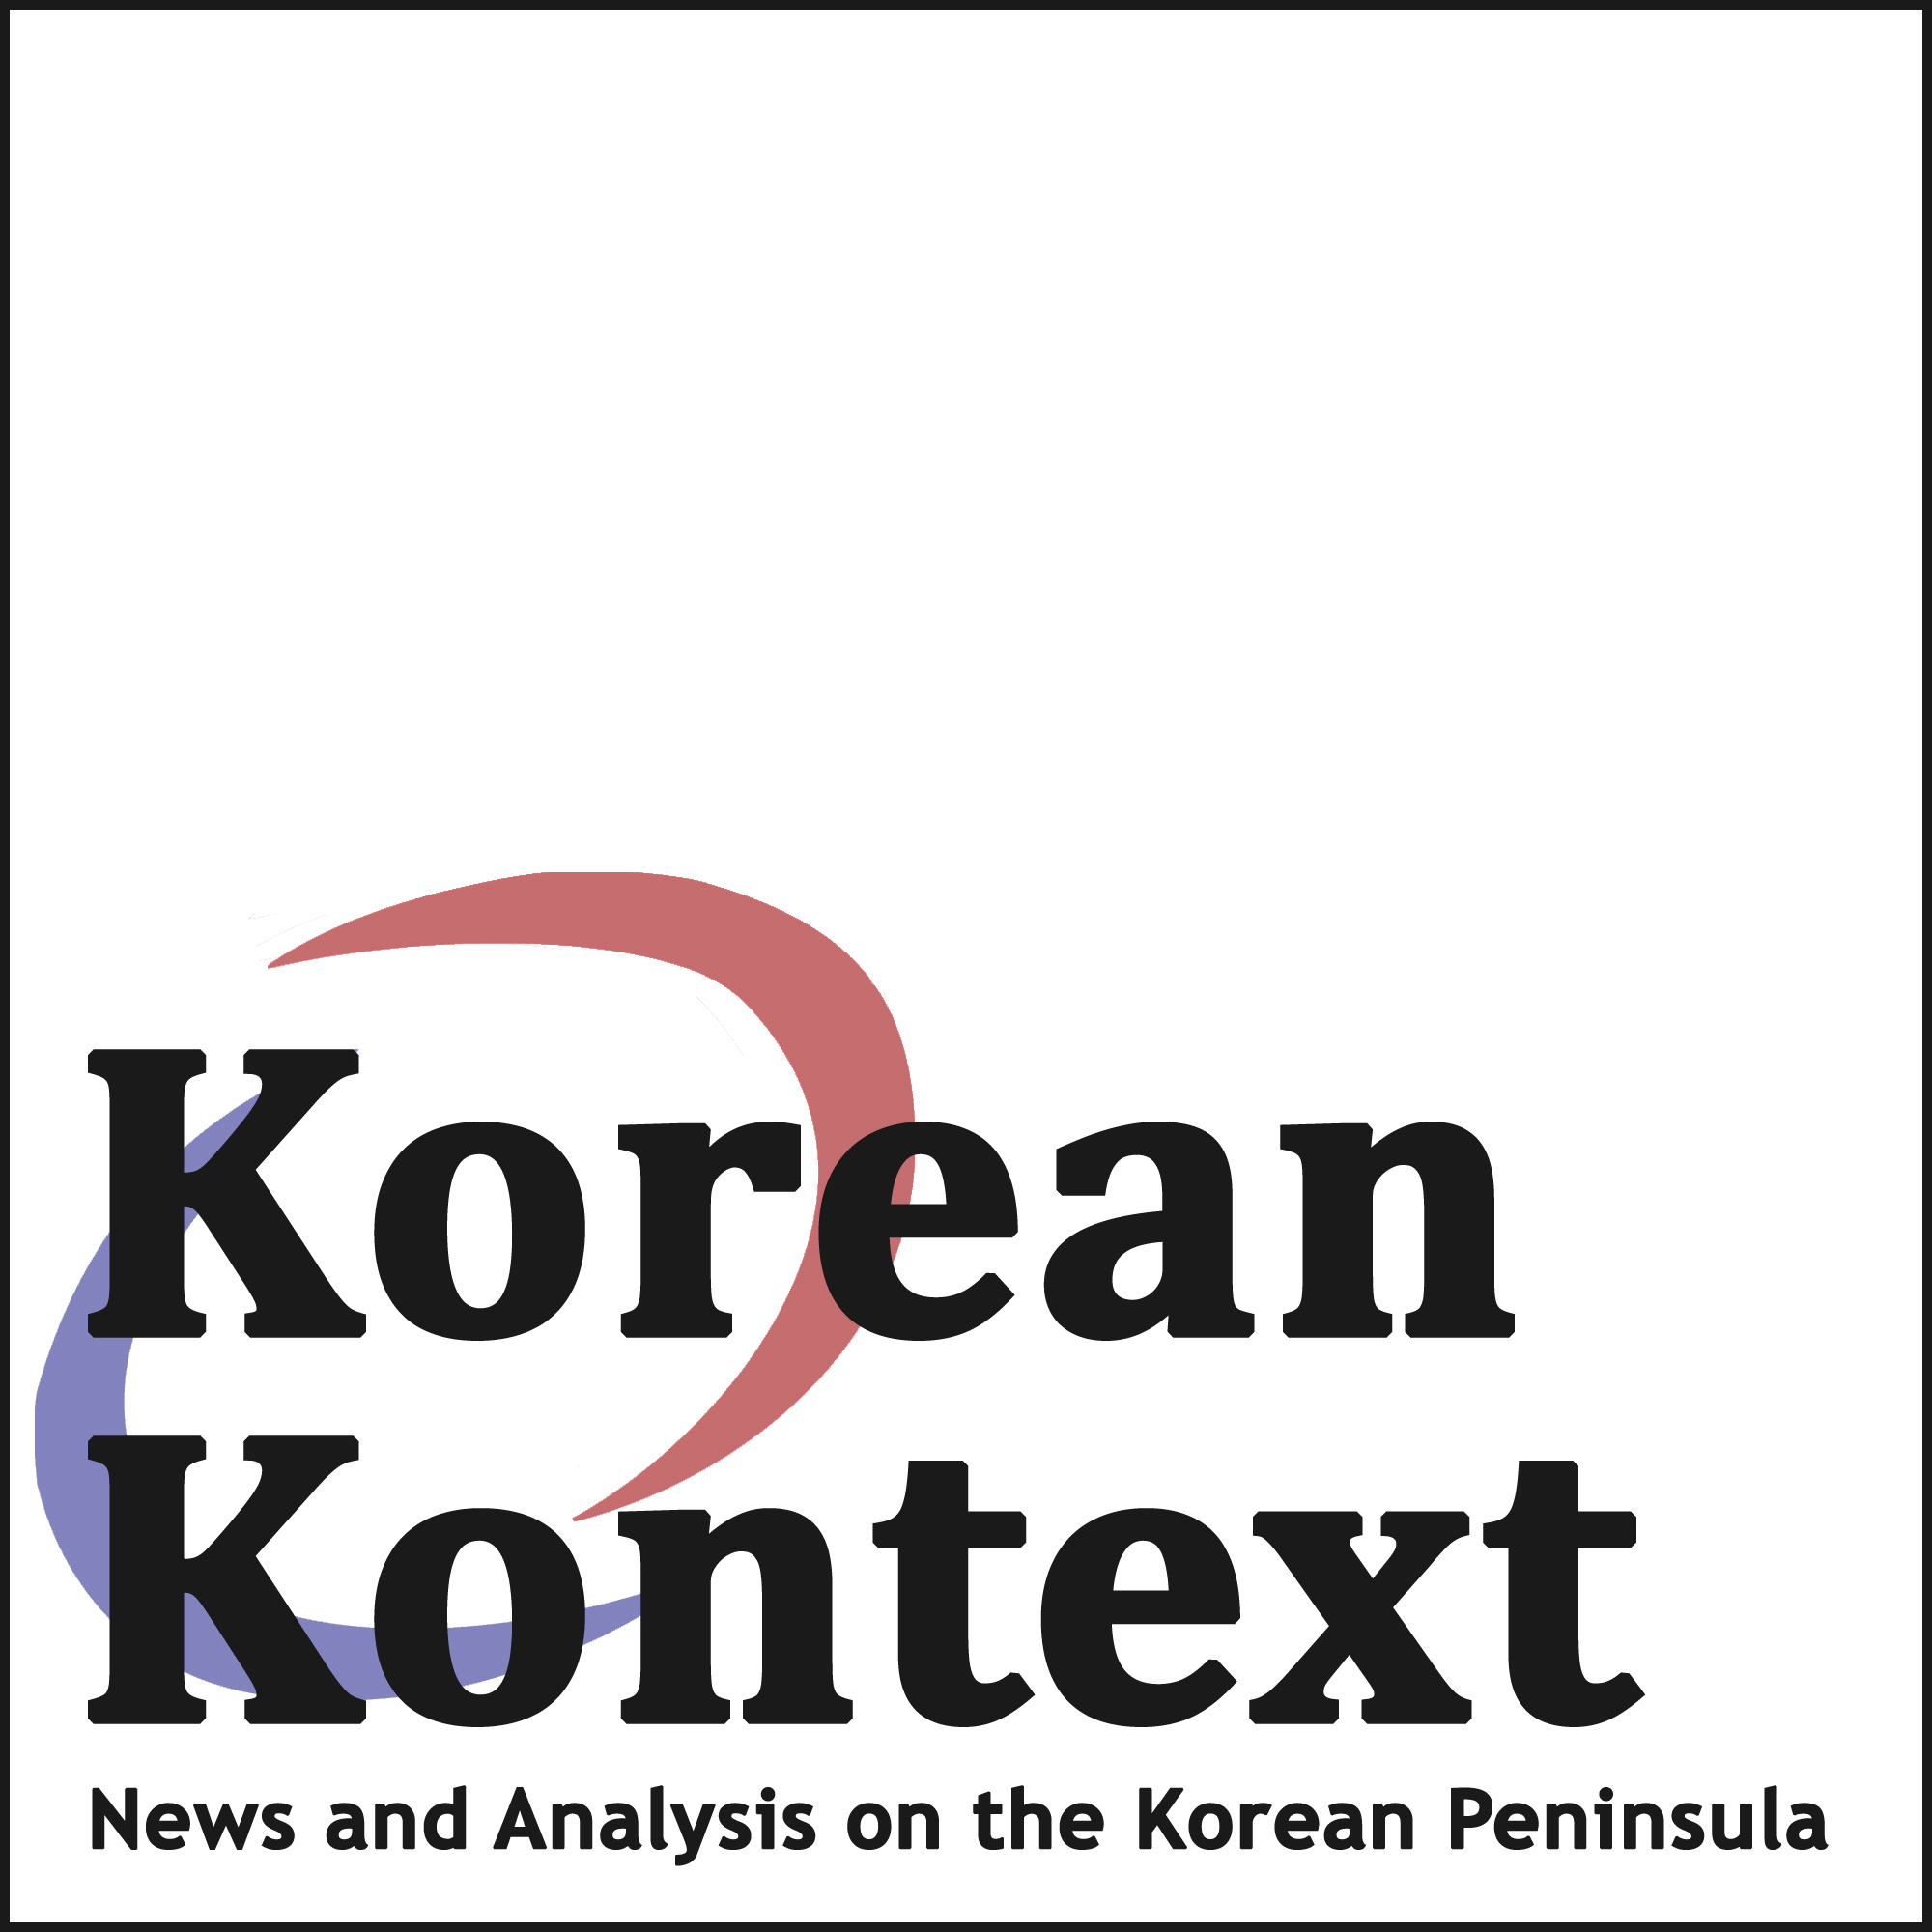 KoreanKontextSquare